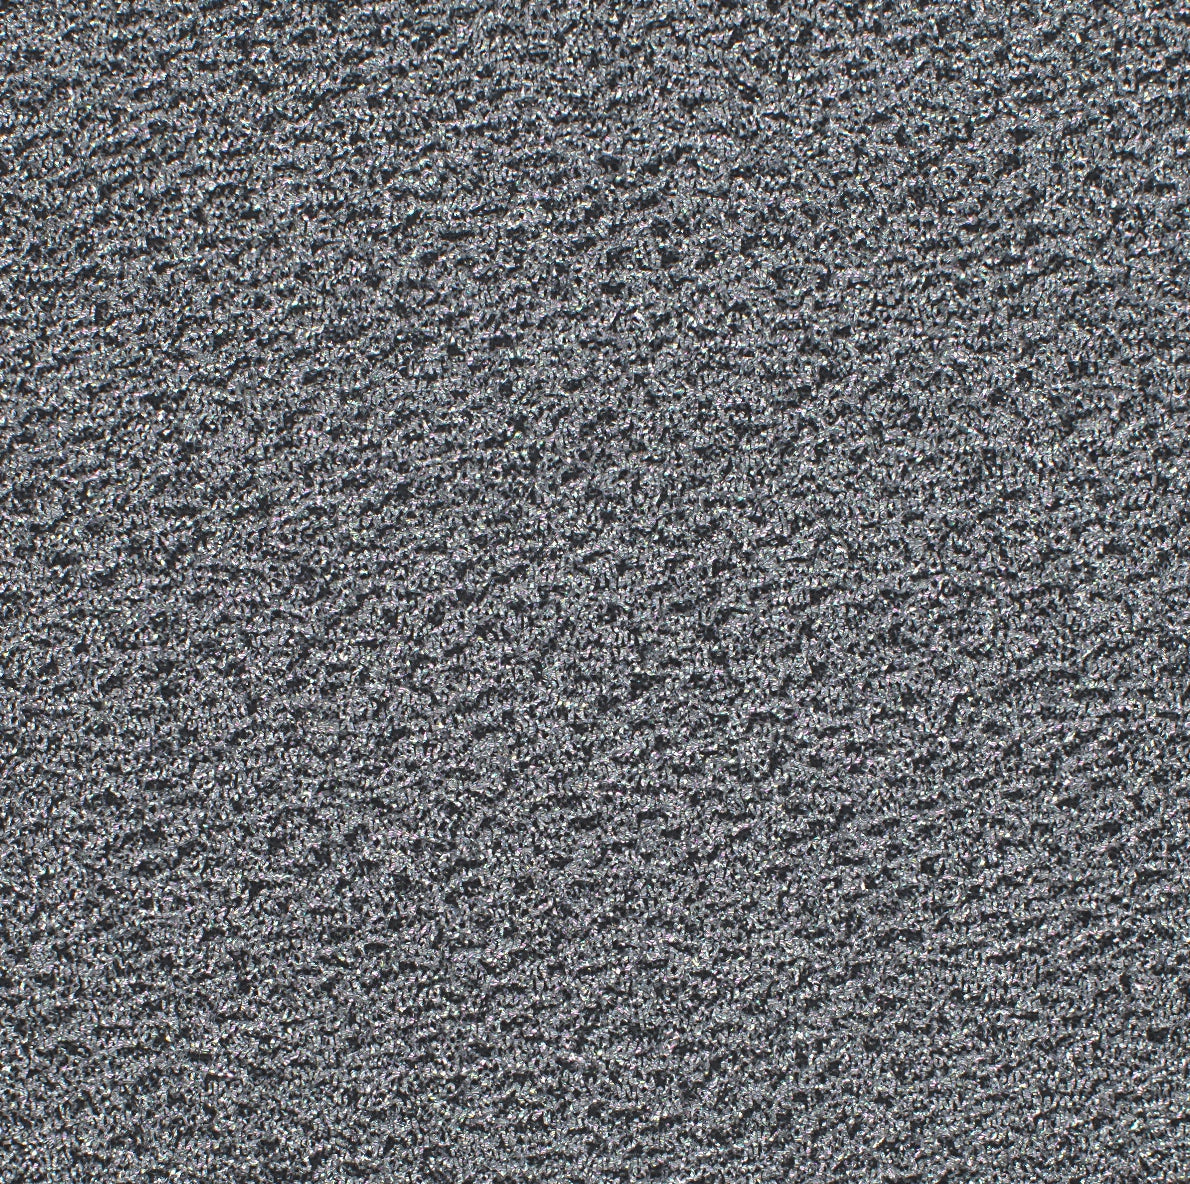 19002-02 Silver Metallic Shimmer Jacquard Plain Dyed Blend blend knit metallic nylon plain dyed polyester silver spandex Metallic, Jacquard - knit fabric - woven fabric - fabric company - fabric wholesale - fabric b2b - fabric factory - high quality fabric - hong kong fabric - fabric hk - acetate fabric - cotton fabric - linen fabric - metallic fabric - nylon fabric - polyester fabric - spandex fabric - chun wing hing - cwh hk - fabric worldwide ship - 針織布 - 梳織布 - 布料公司- 布料批發 - 香港布料 - 秦榮興